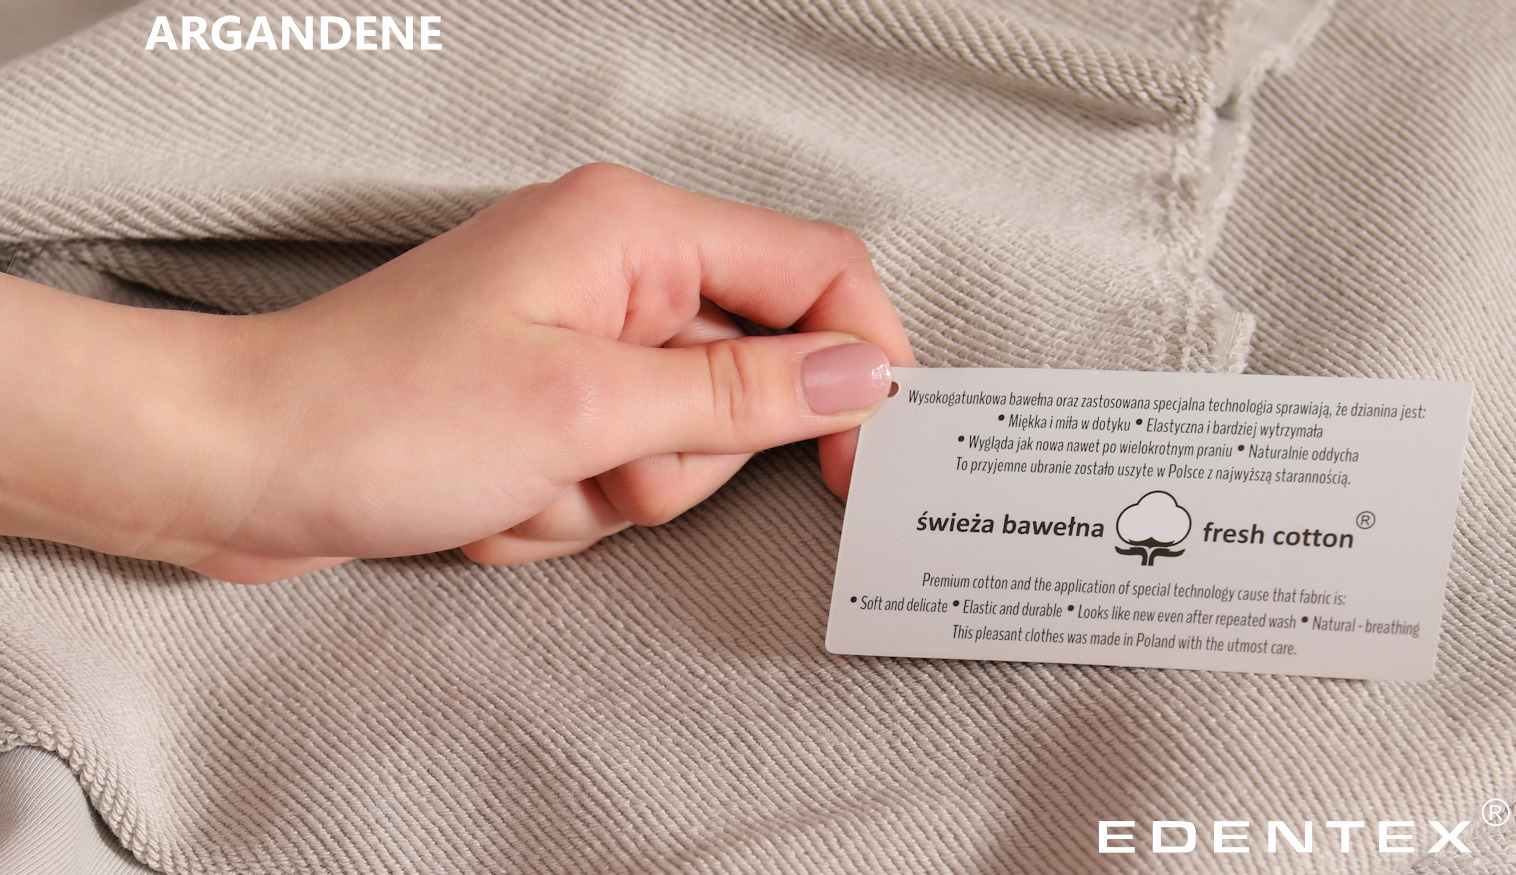 New fabric: EDENTEX-ARGANDENE® 